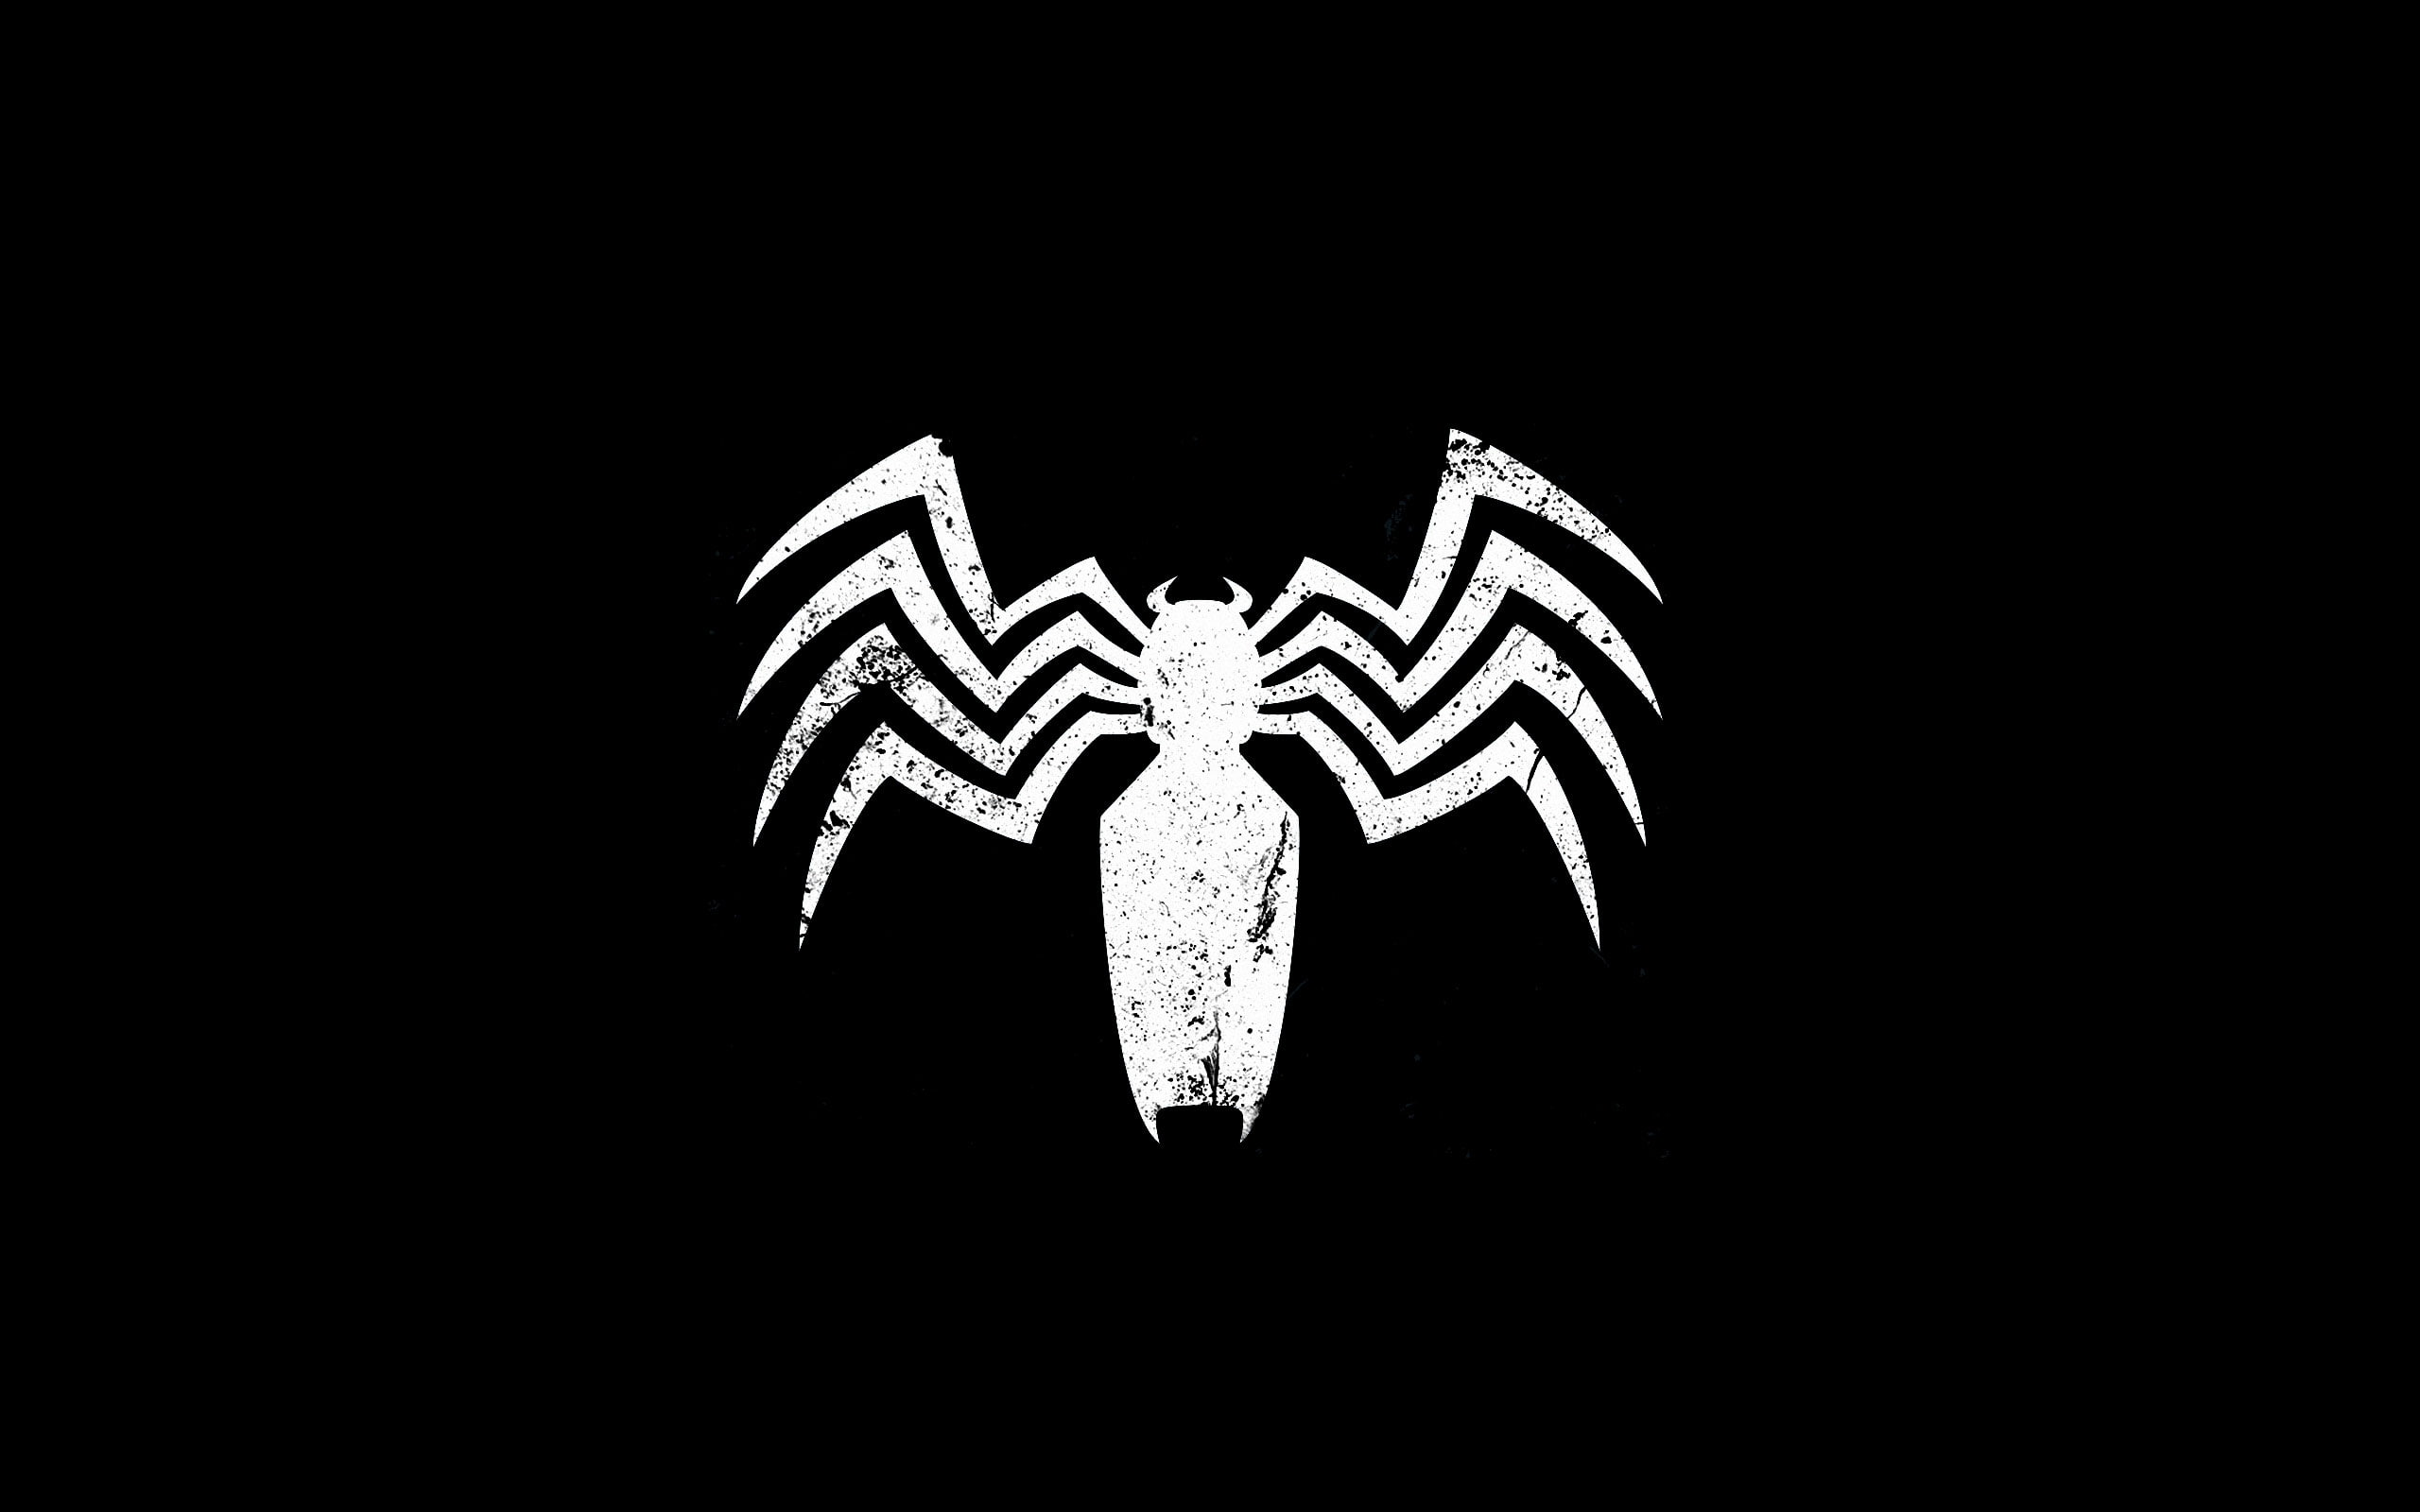 venom, logo, white, Others, copy space, black background, indoors